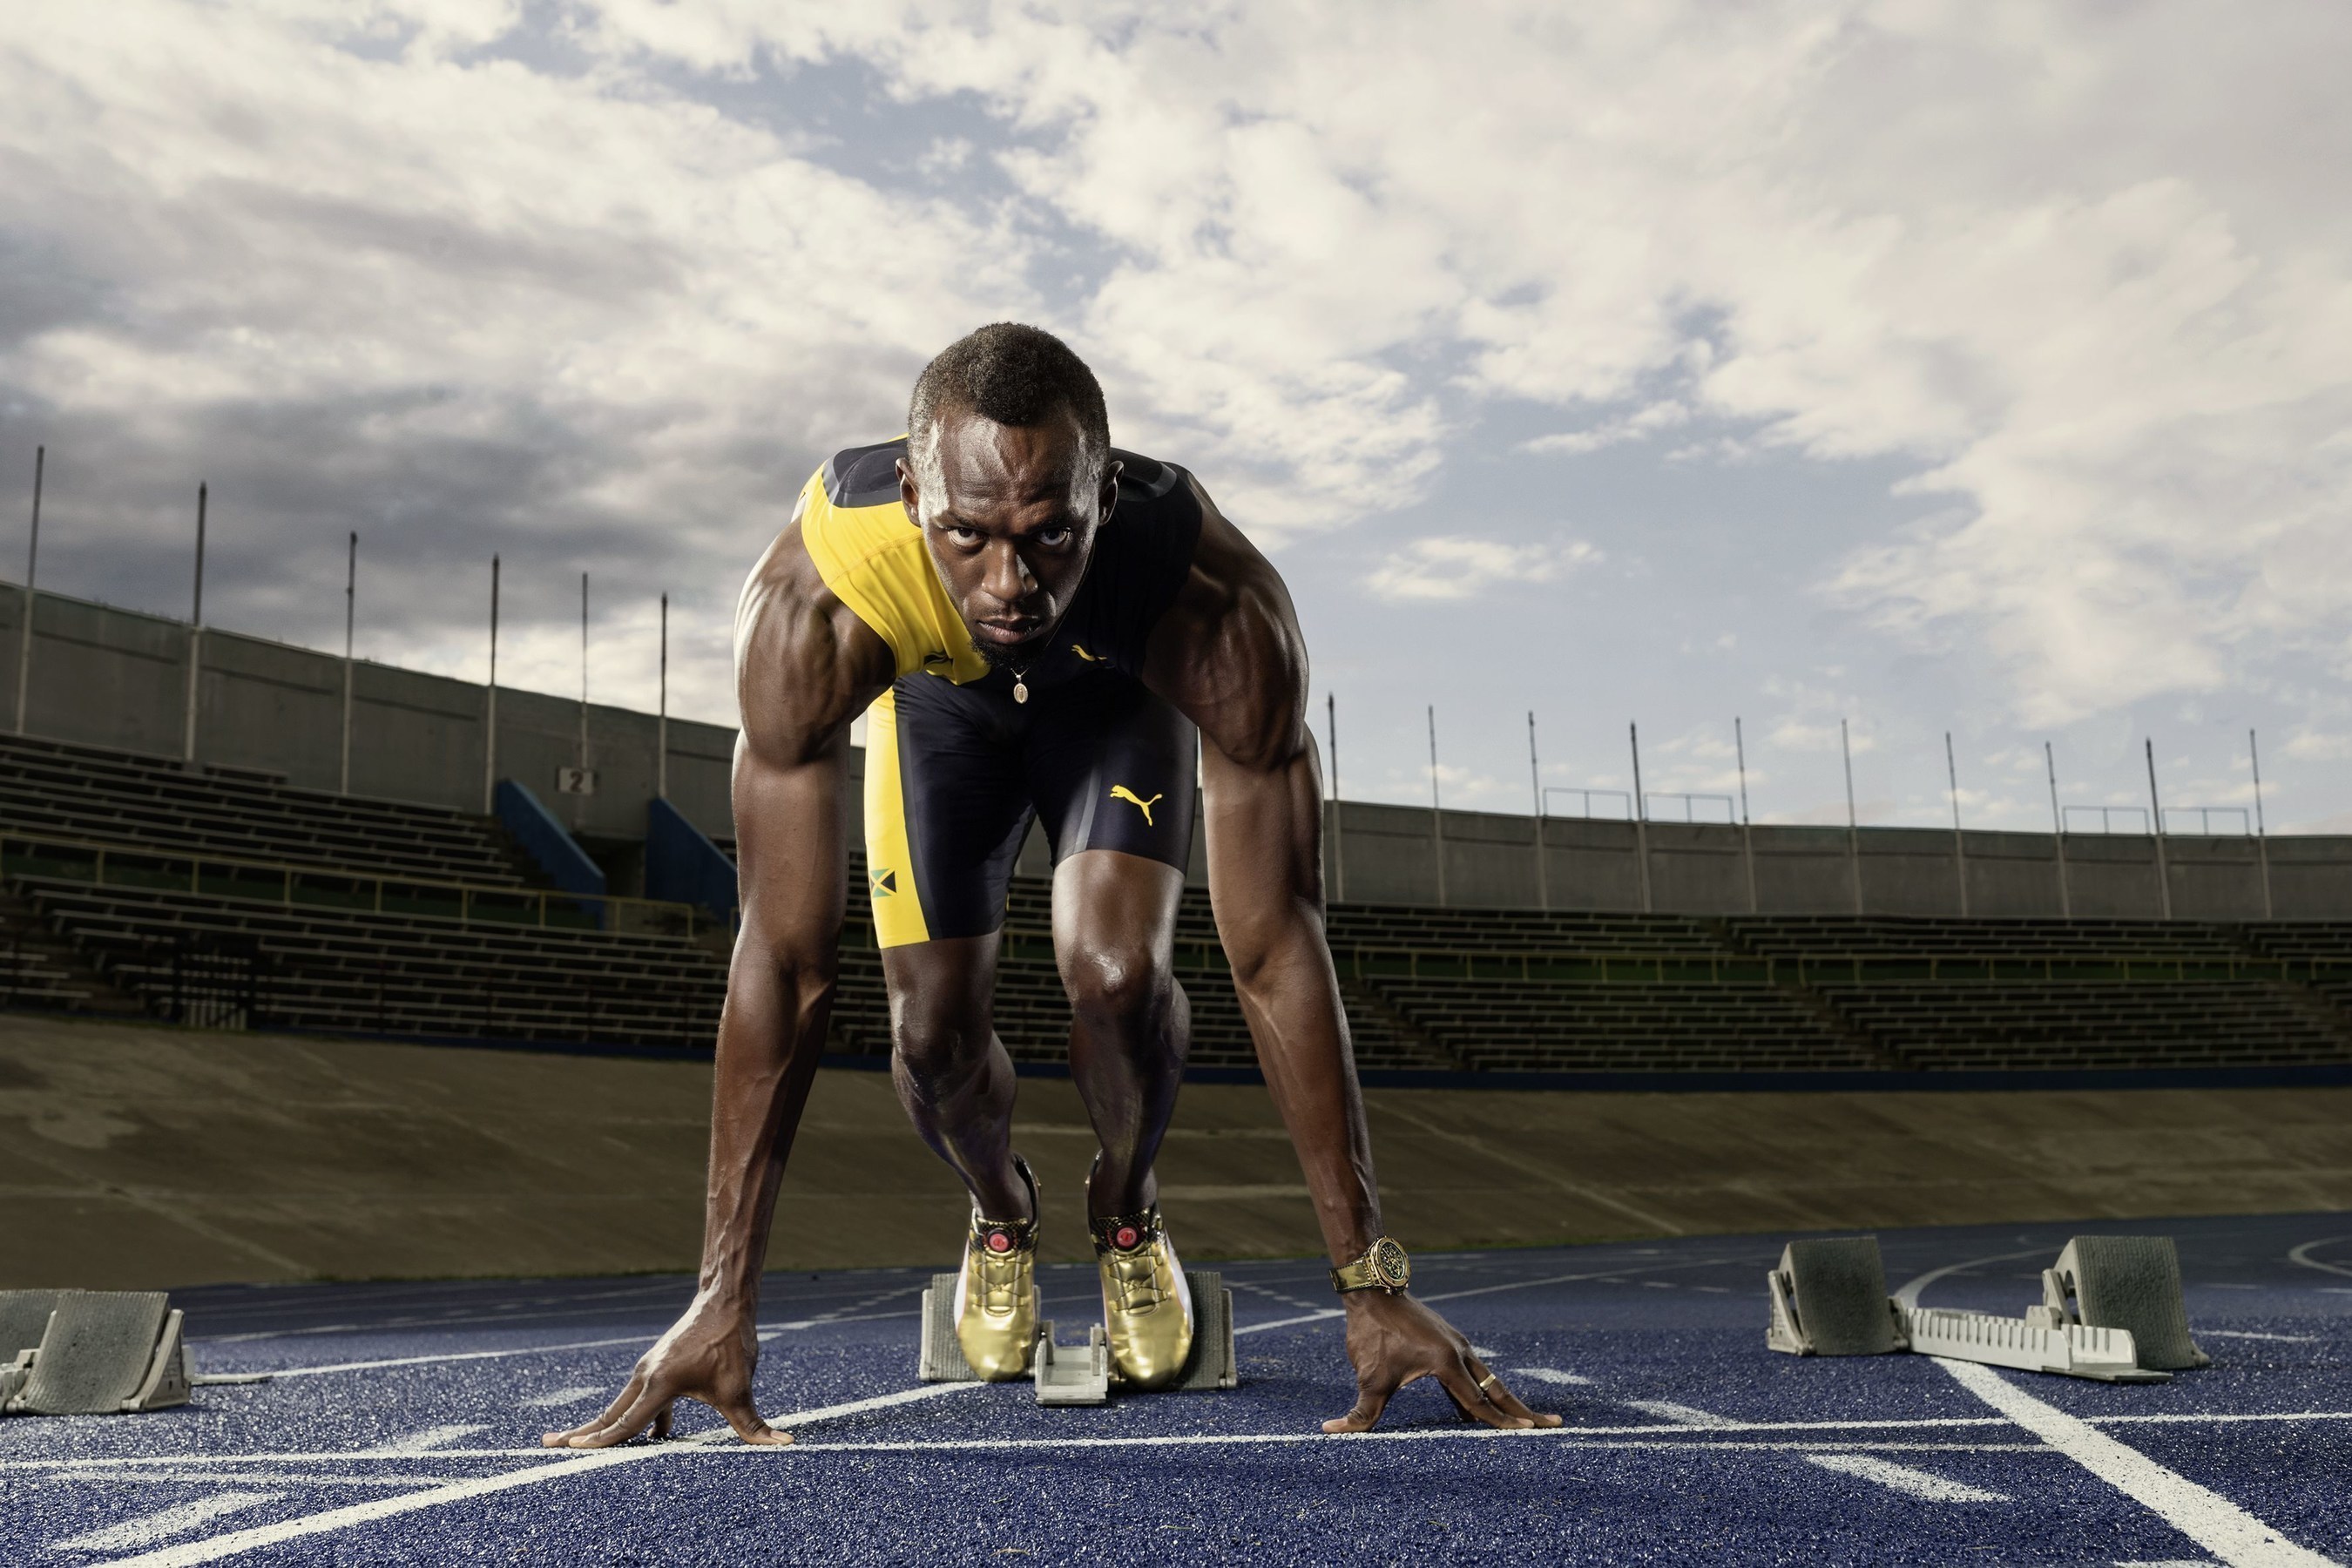 The fastest man in the world won his third triple Olympic gold. Copyright: Jon W Johnson. (PRNewsFoto/HUBLOT)